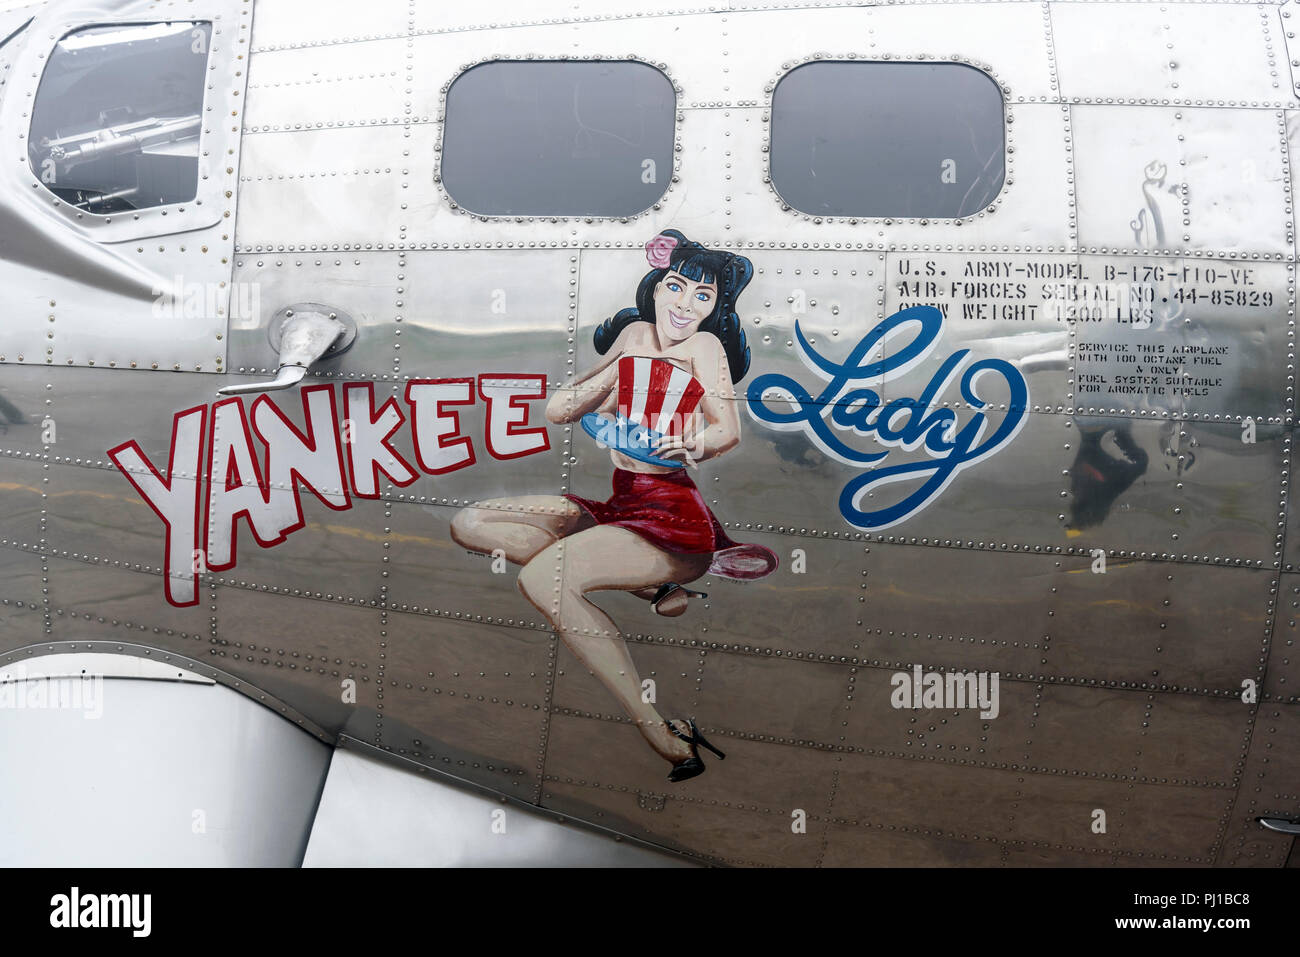 30-05-17, Stratford, Conneticut, USA. Die fliegende Festung "Yankee Lady' bei Sikorski Memorial Airport. Foto: © Simon Grosset Stockfoto